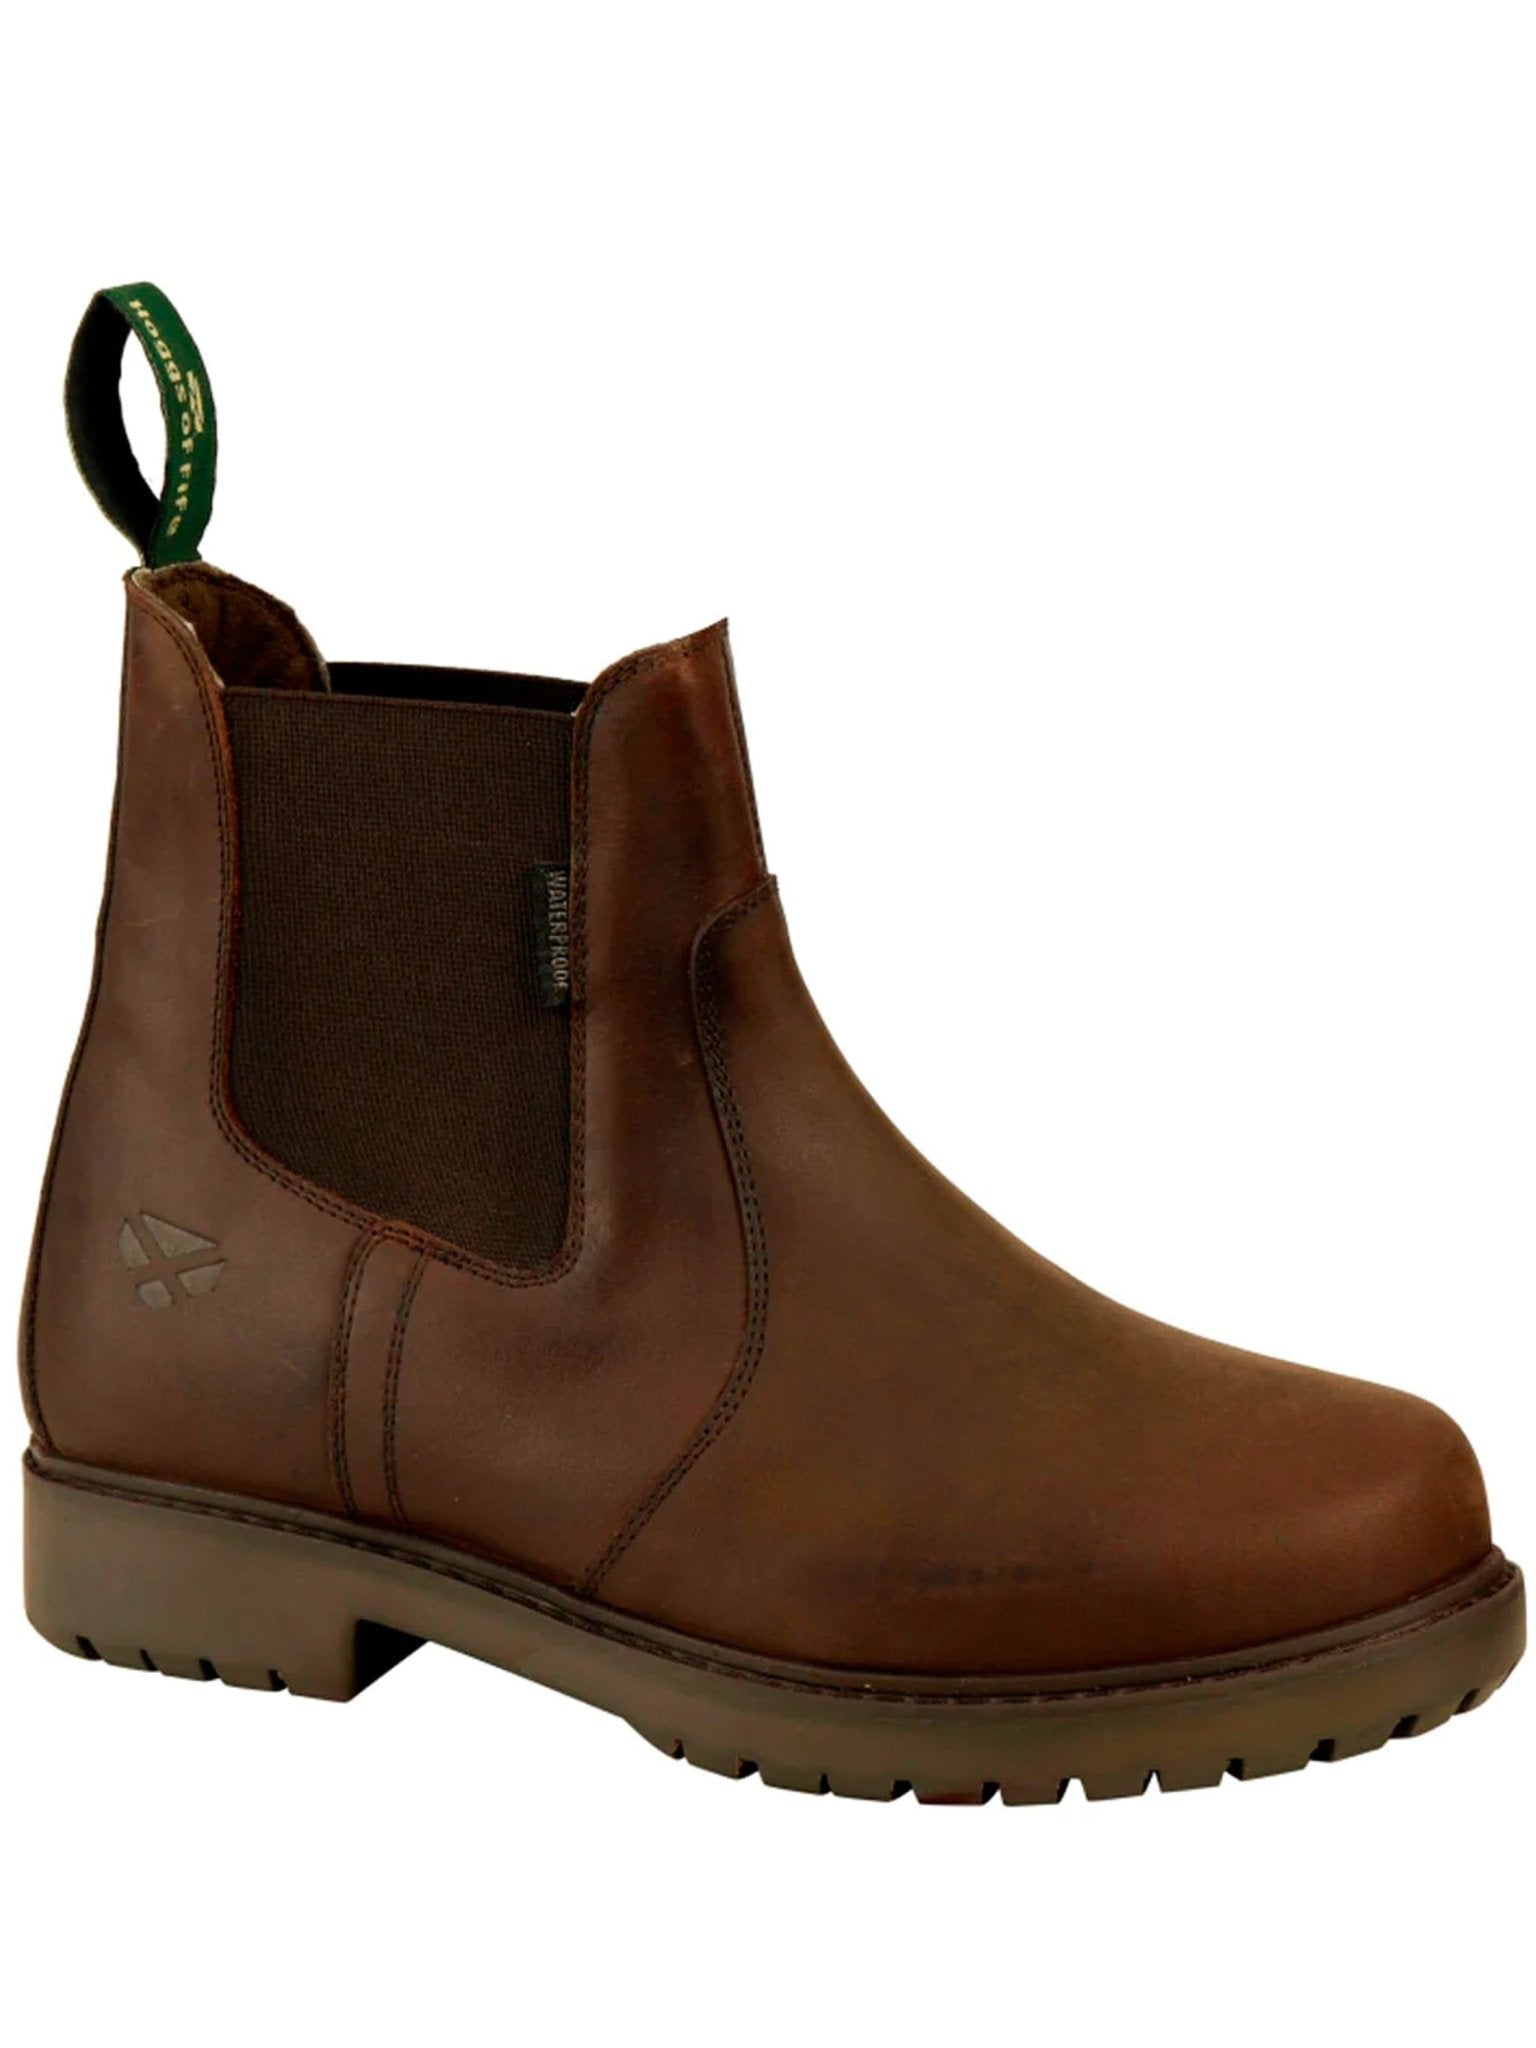 Hoggs of Fife Hoggs of Fife - Waterproof Ladies Chelsea boot / Waterproof womens Dealer Boot - Northumberland Boots